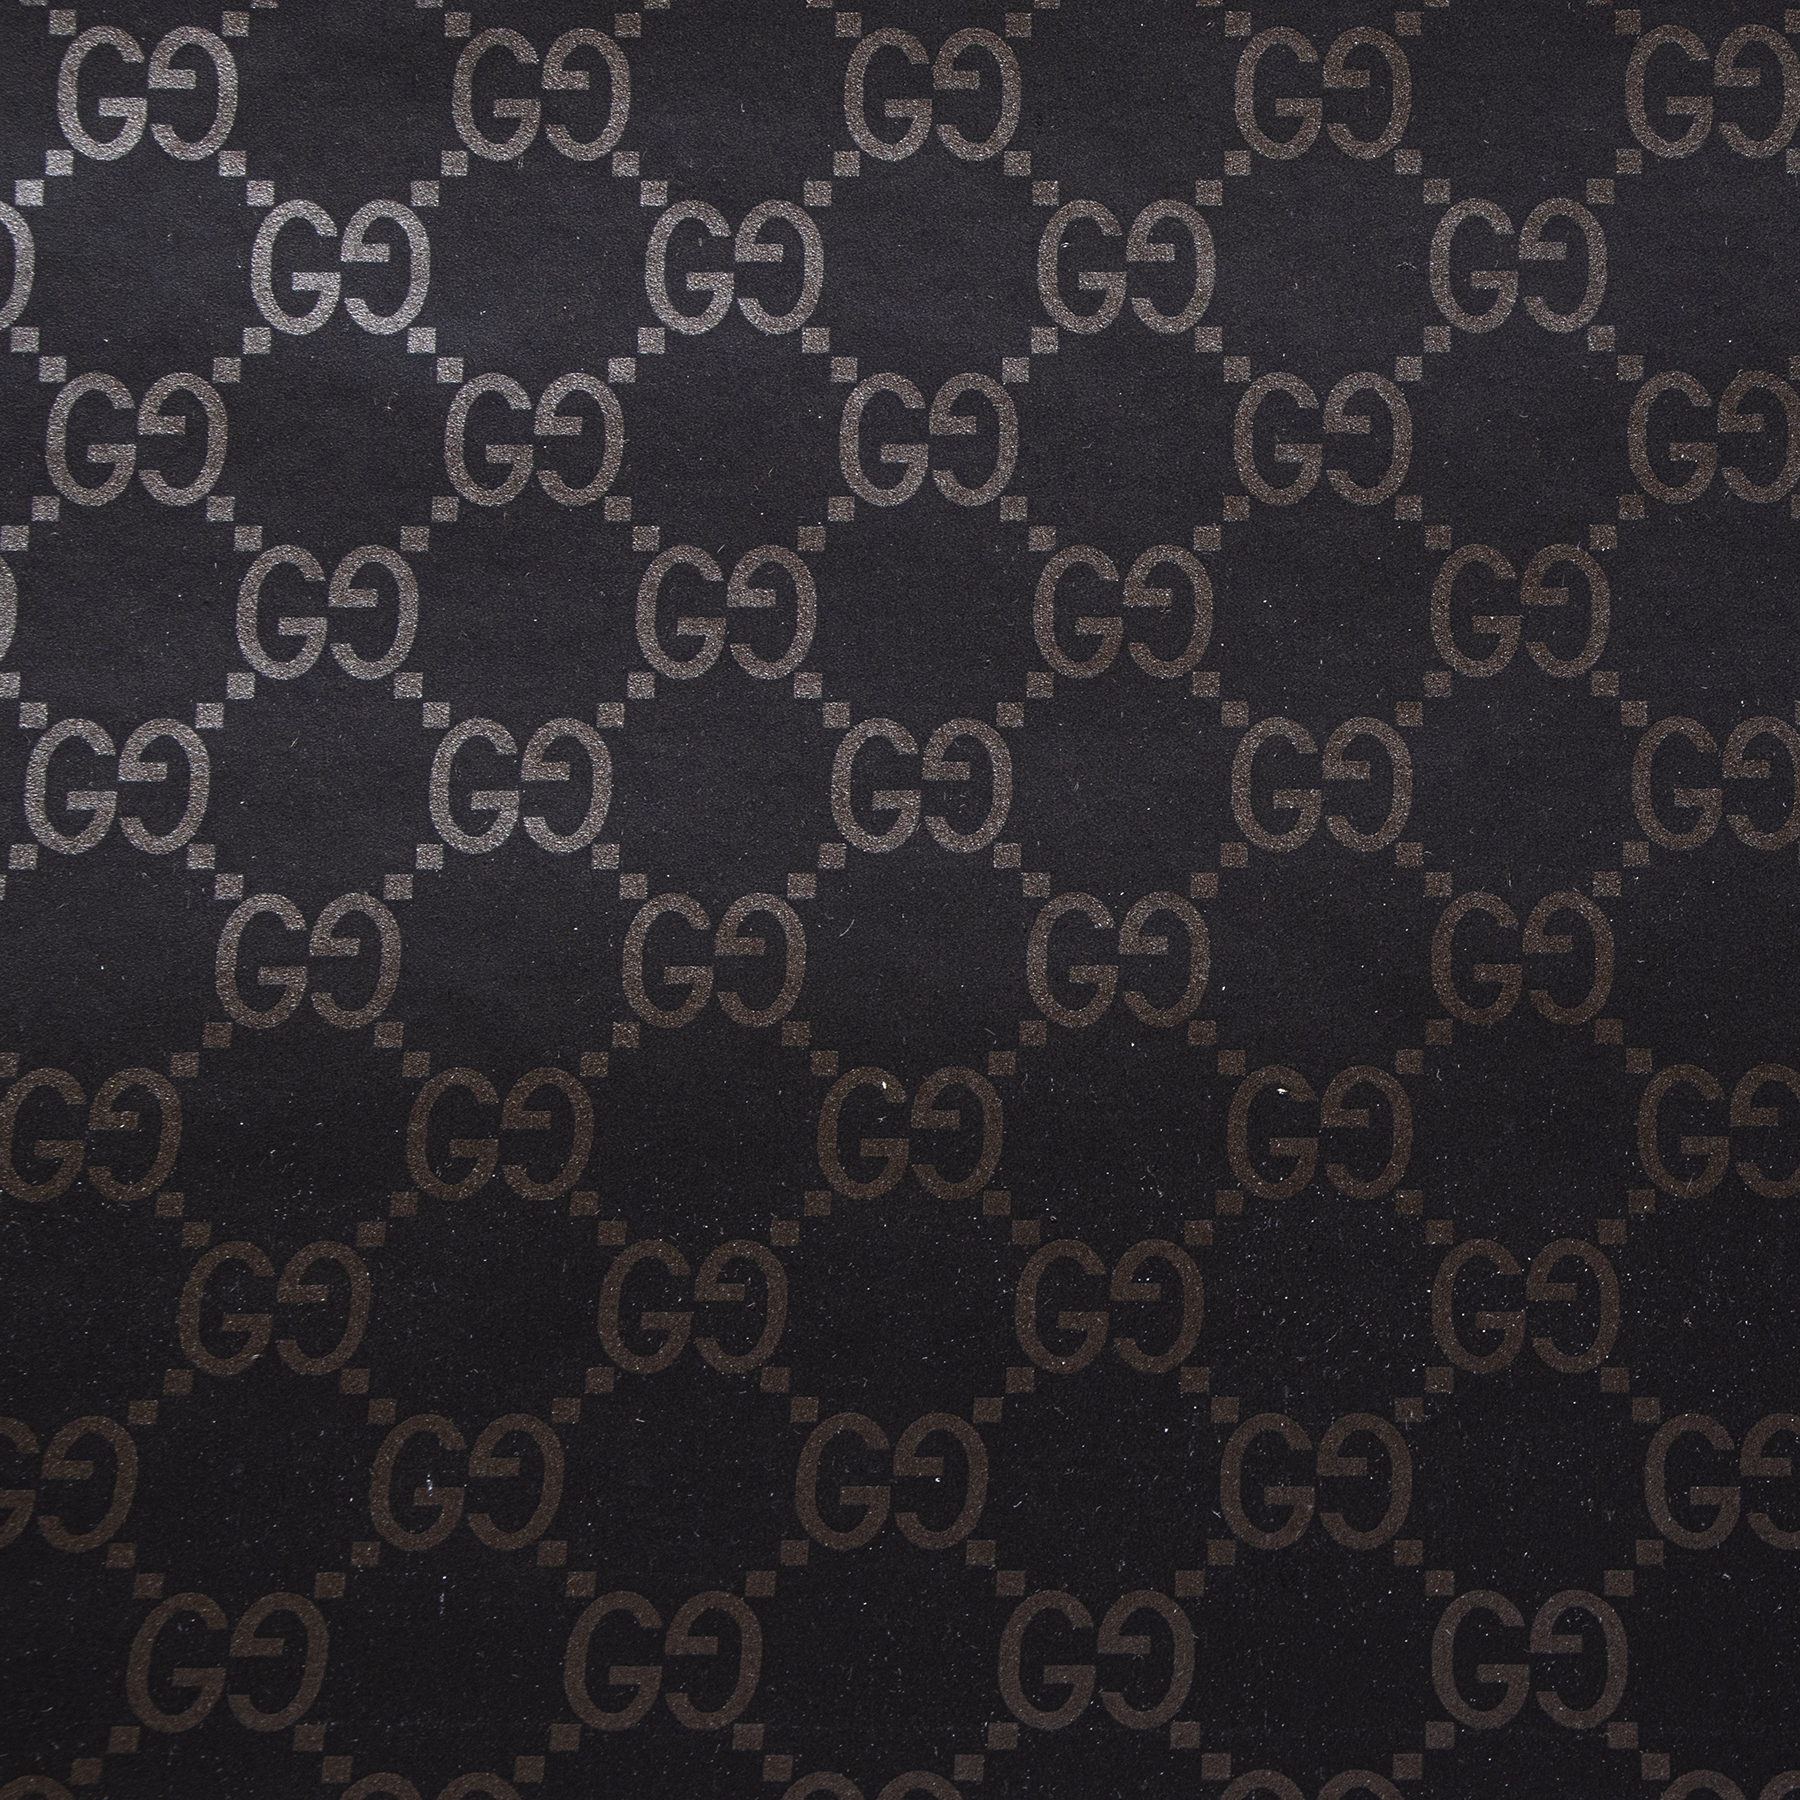 230 Logo wallpaper ideas | wallpaper, iphone wallpaper, android wallpaper